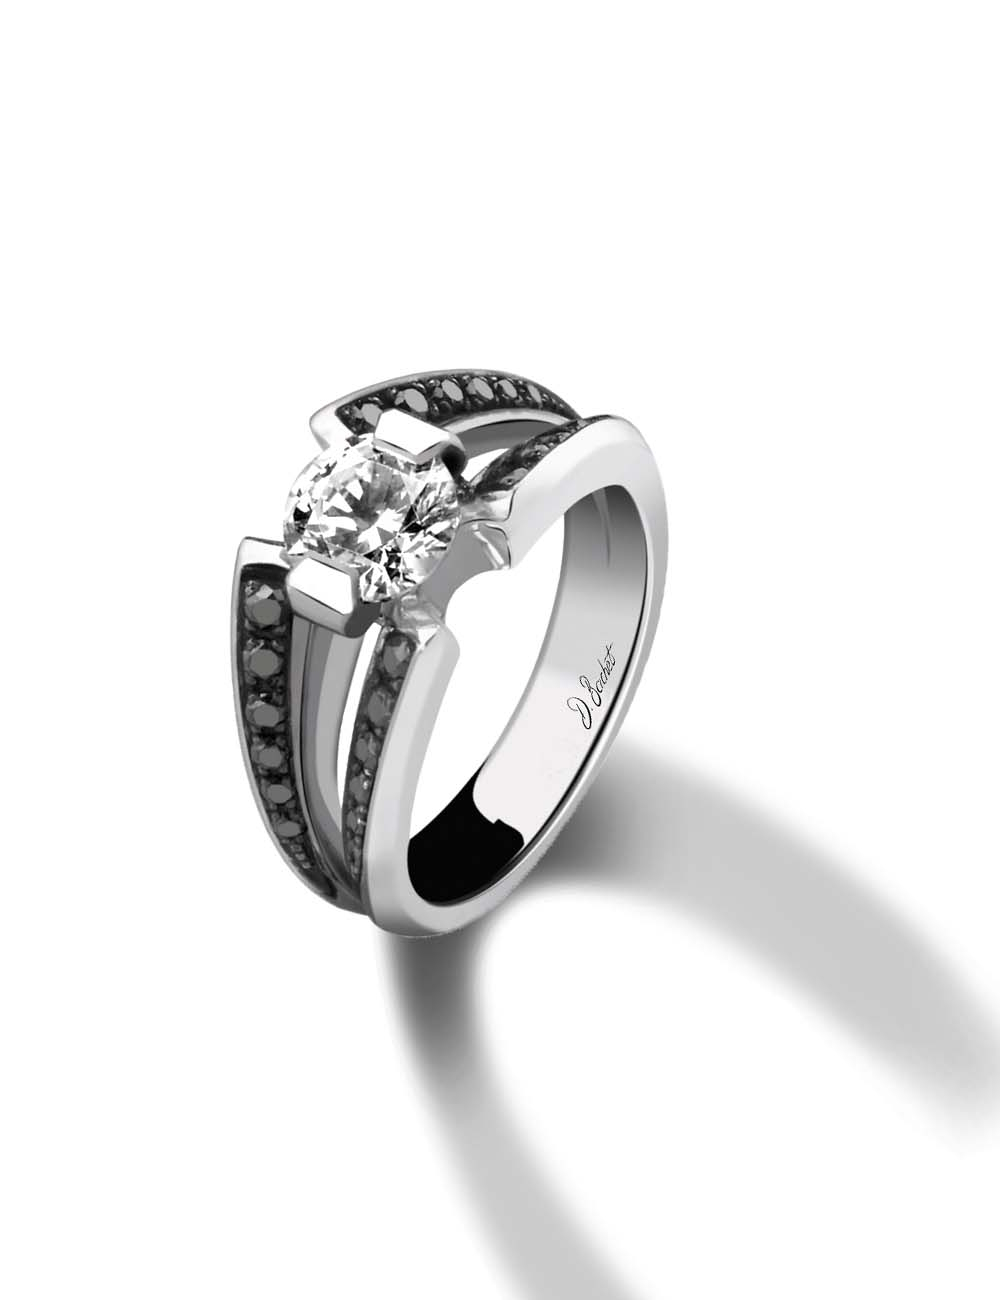 D.Bachet 1ct white diamond engagement ring, double platinum band with black diamonds.